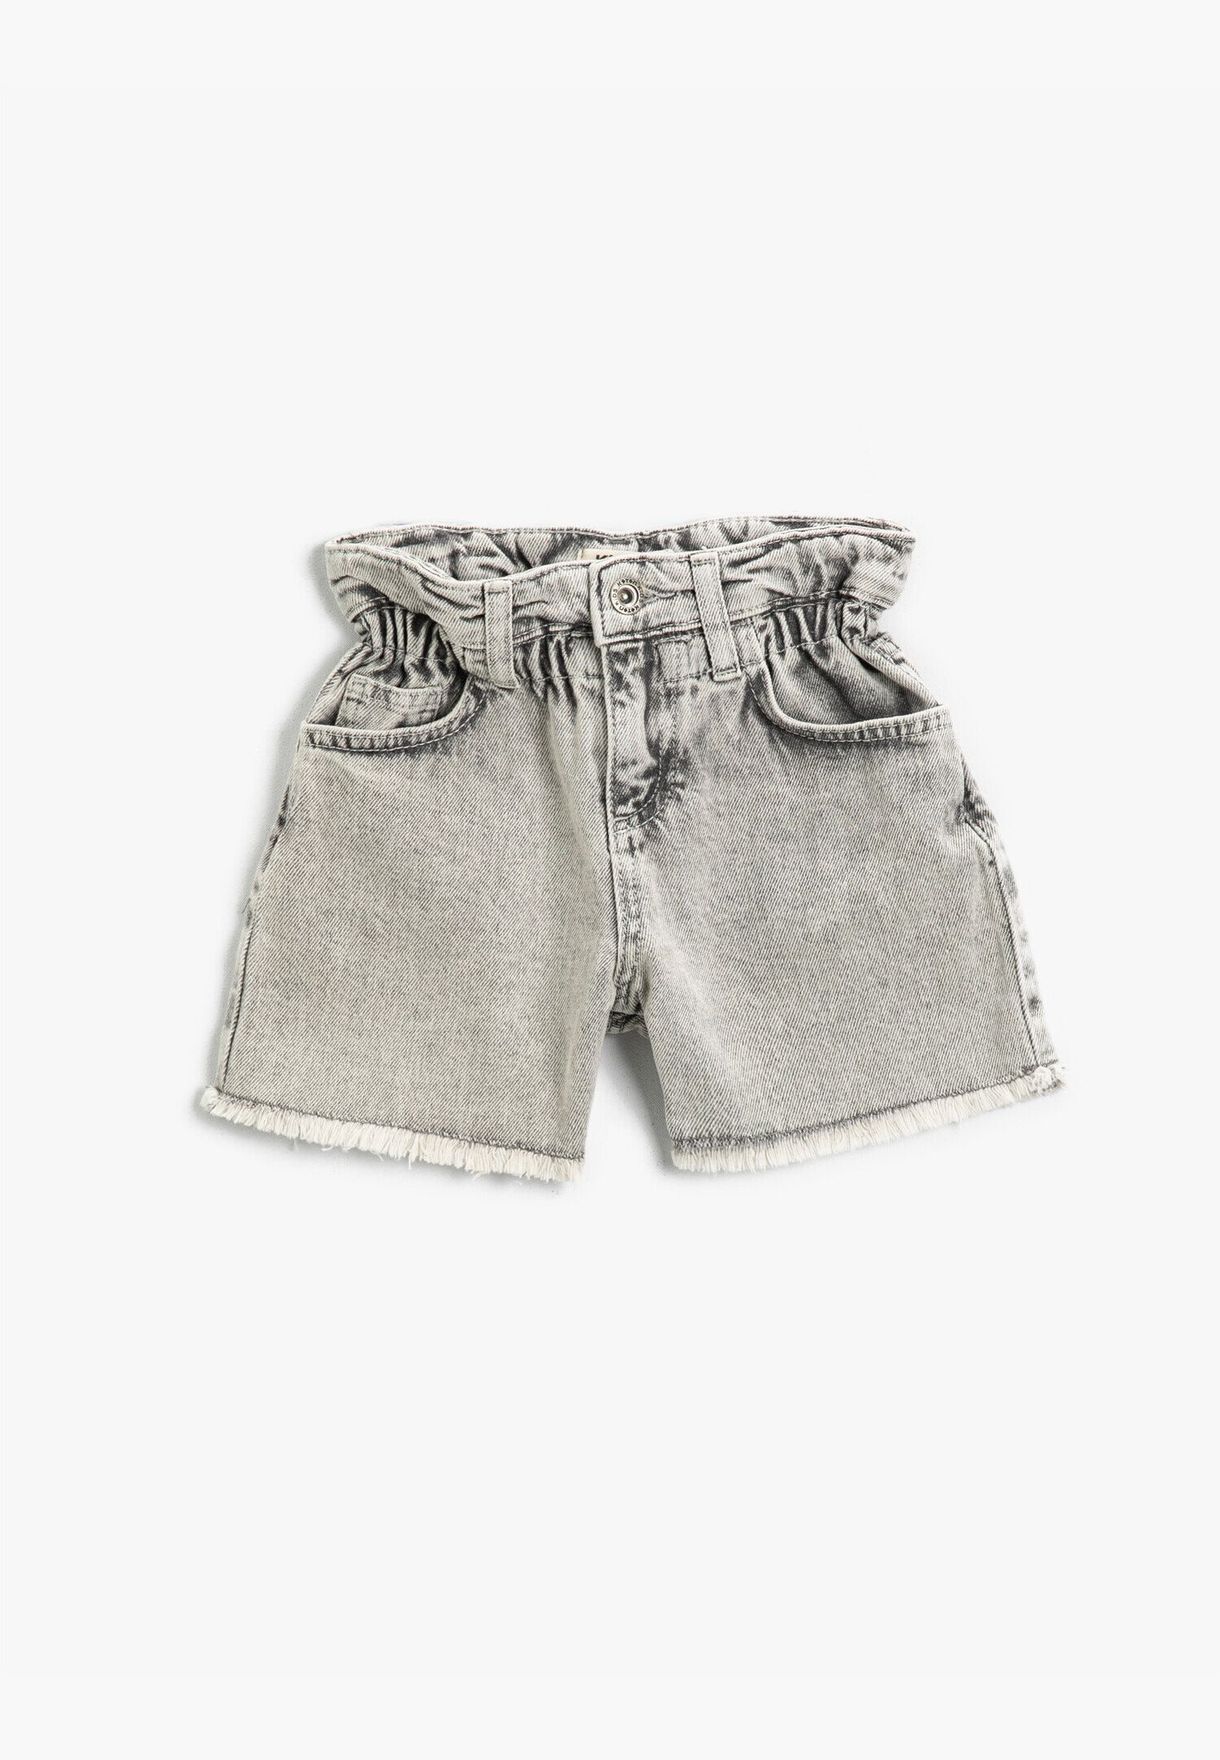 Basic Jean Shorts Cotton Drawstring